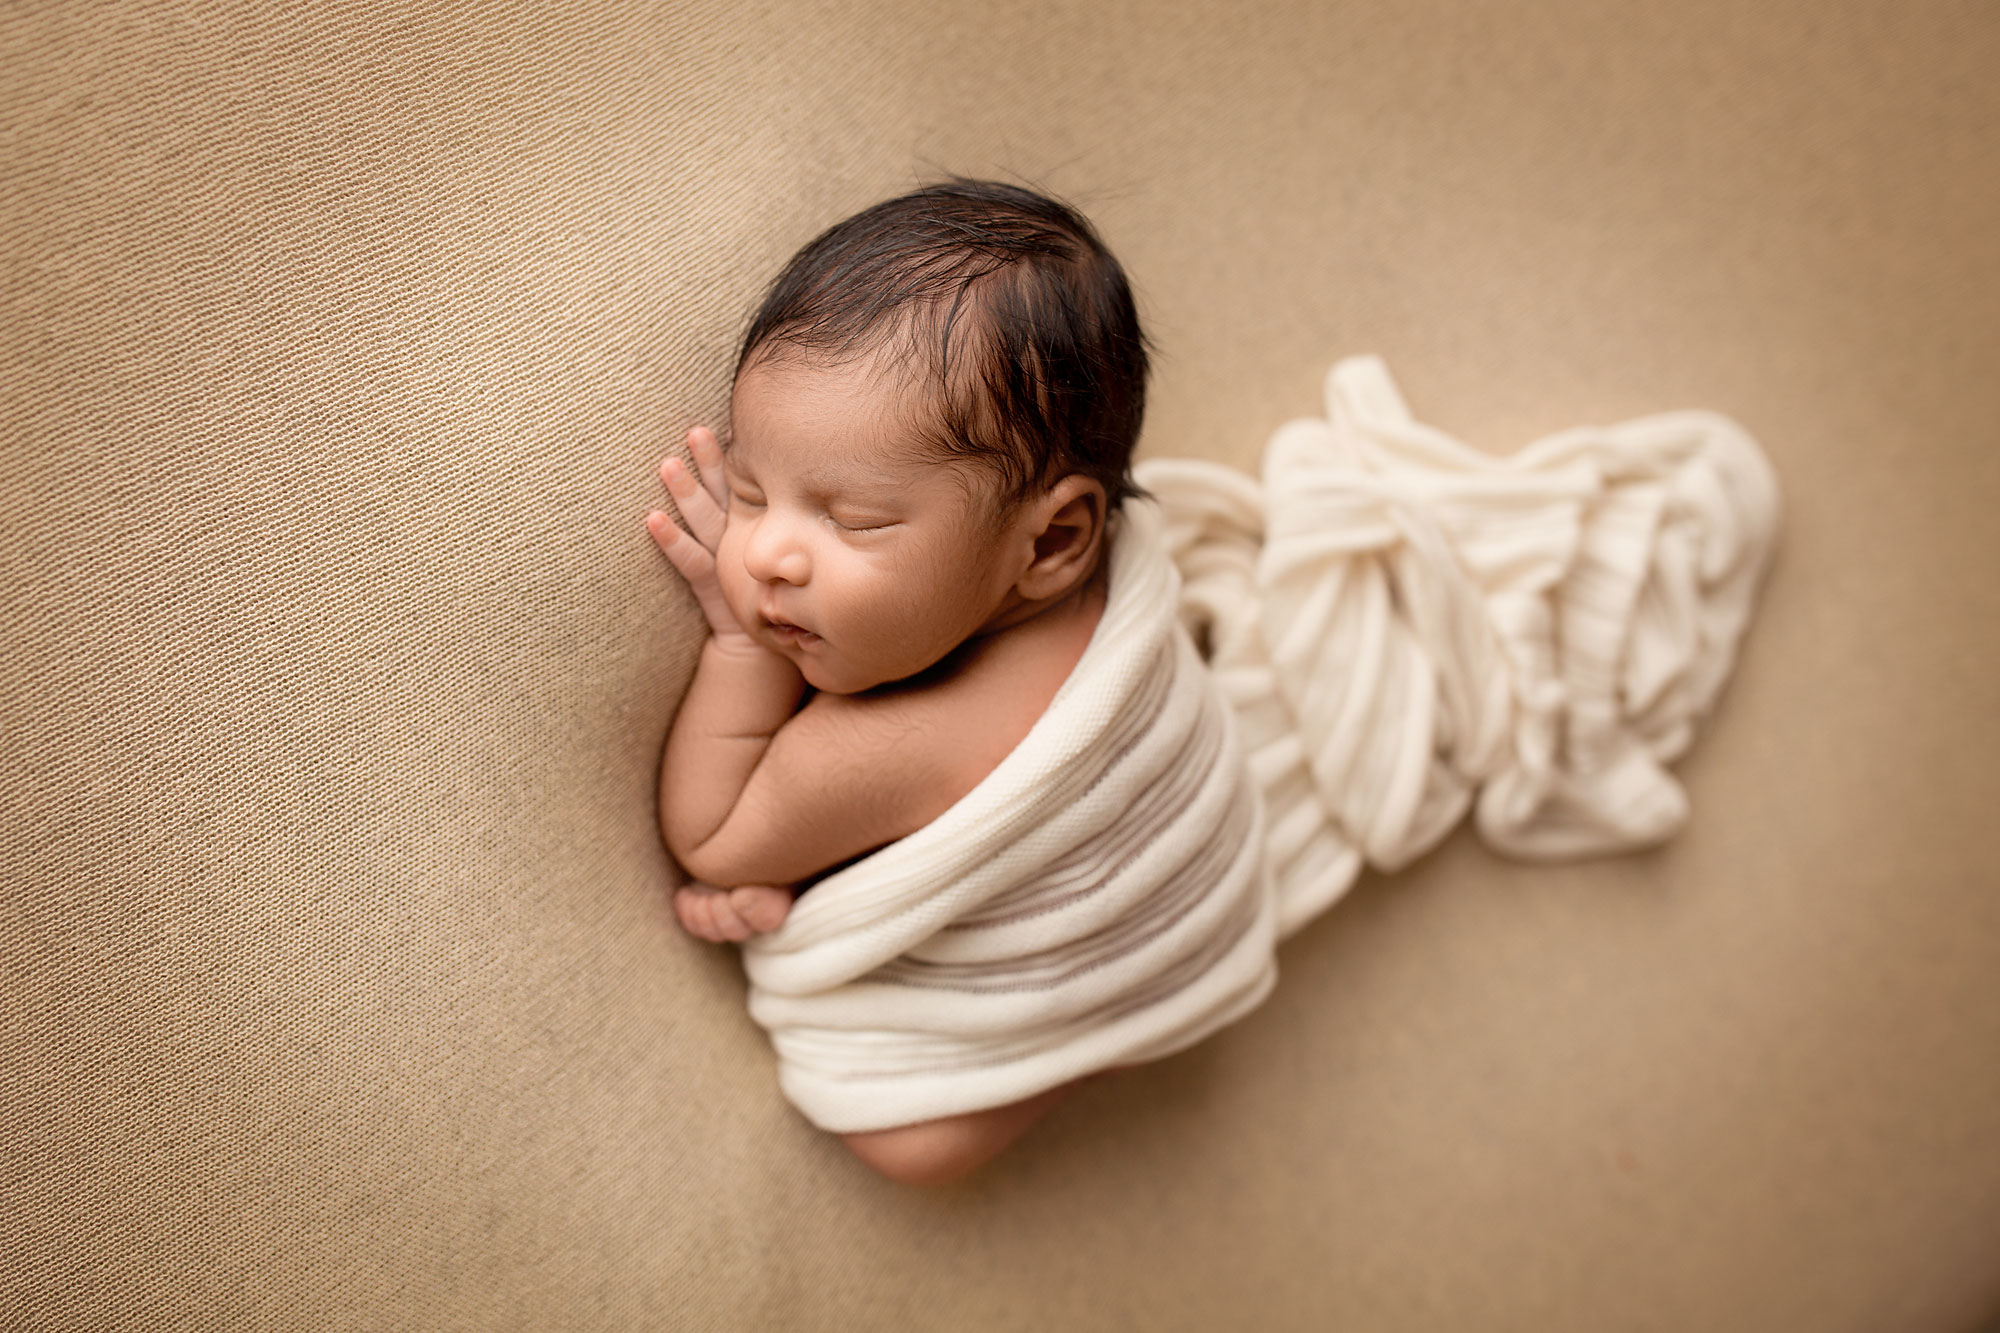 Somerset county NJ newborn photo session baby boy 